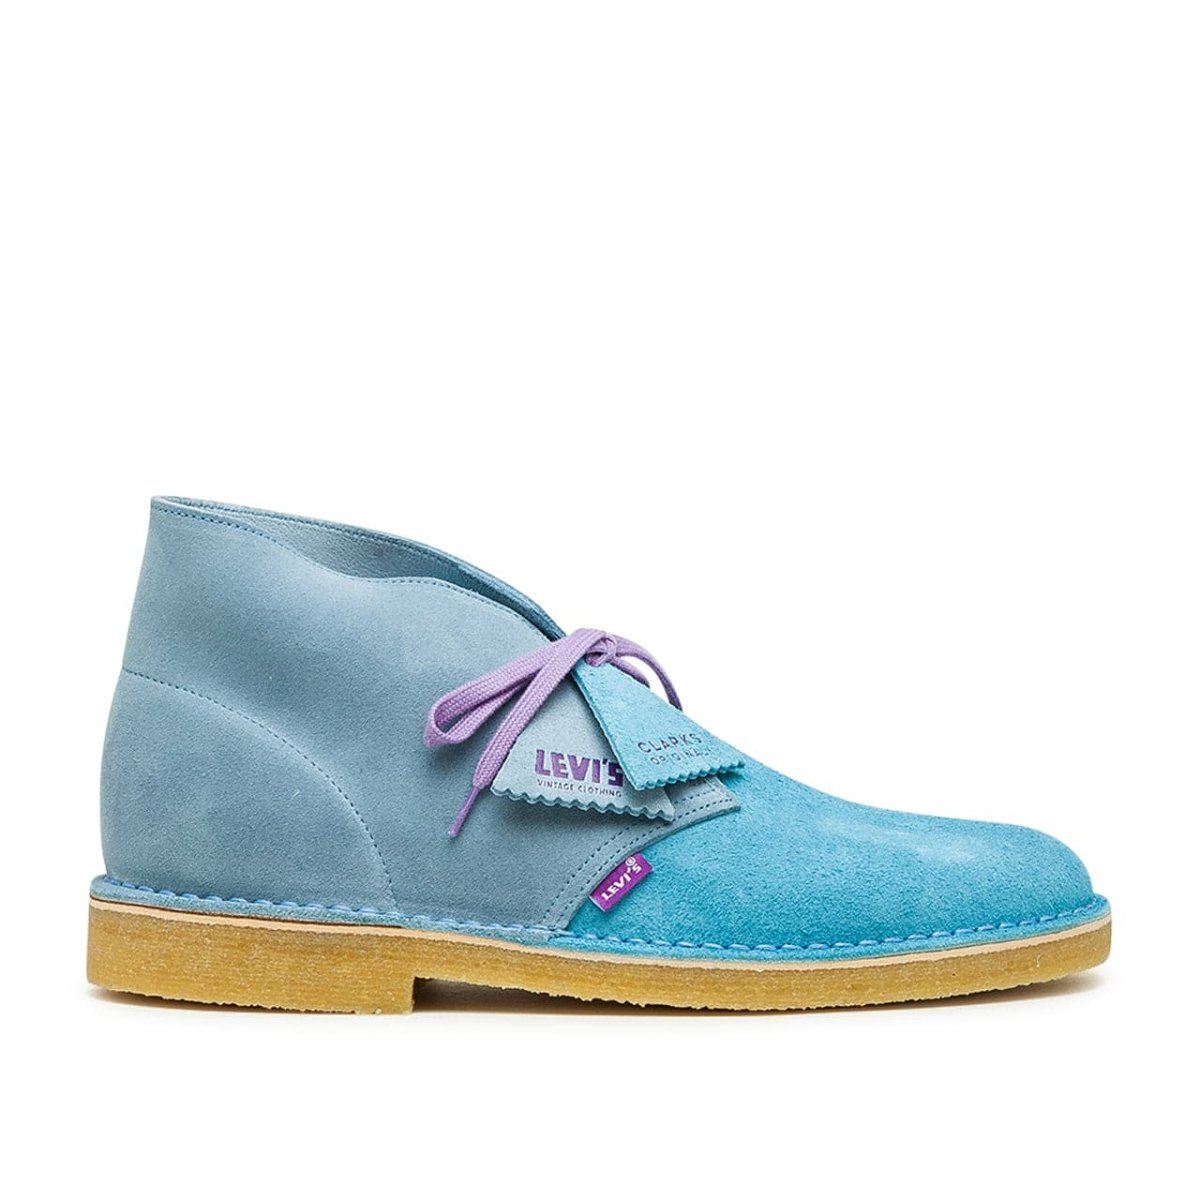 Image of Clarks Originals x Levis Vintage Clothing Desert Boot (Blue)